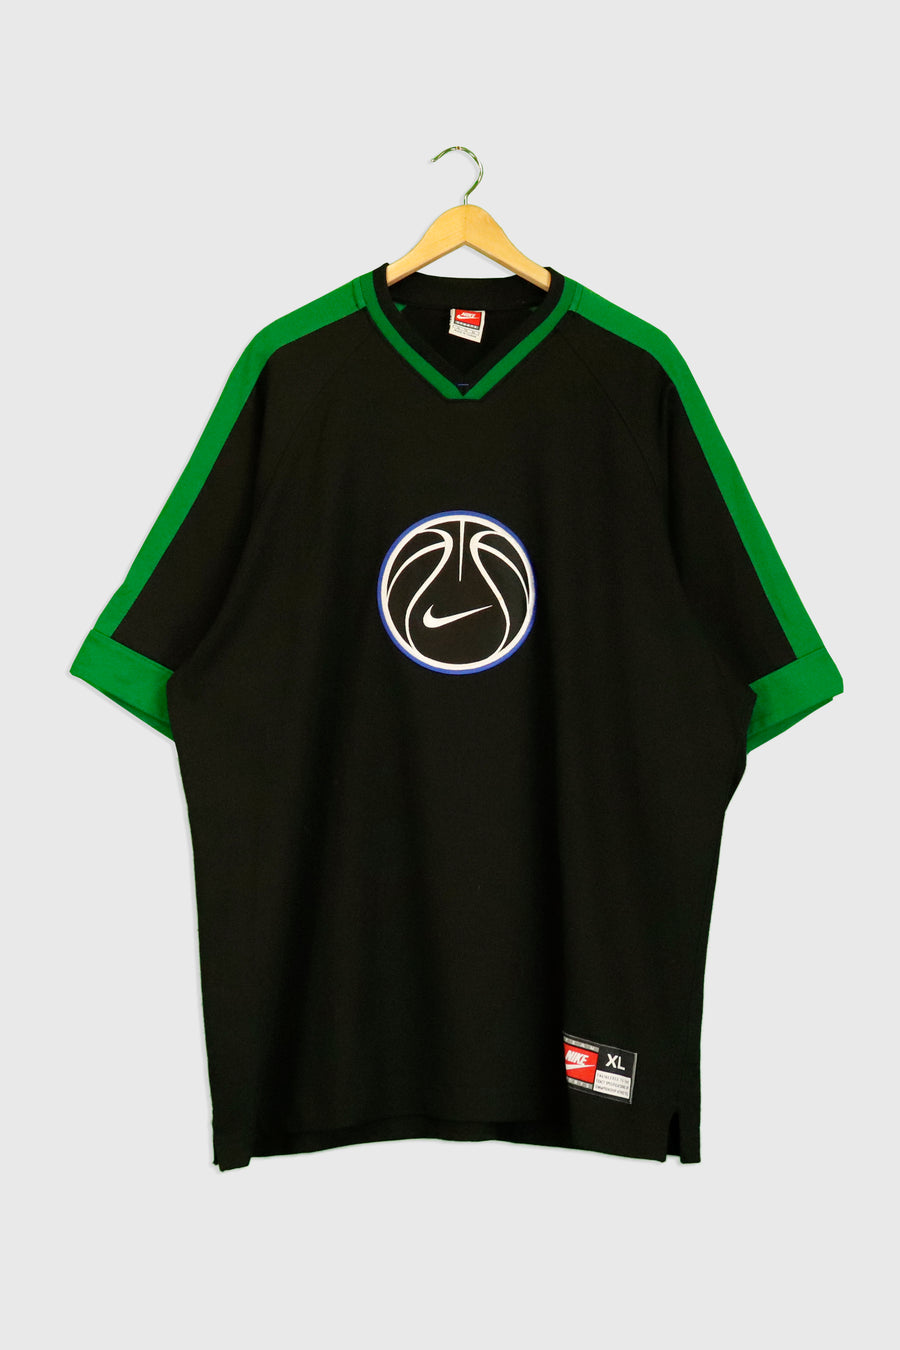 Vintage NBA Nike Basketball Embroidered Jersey Sz XL